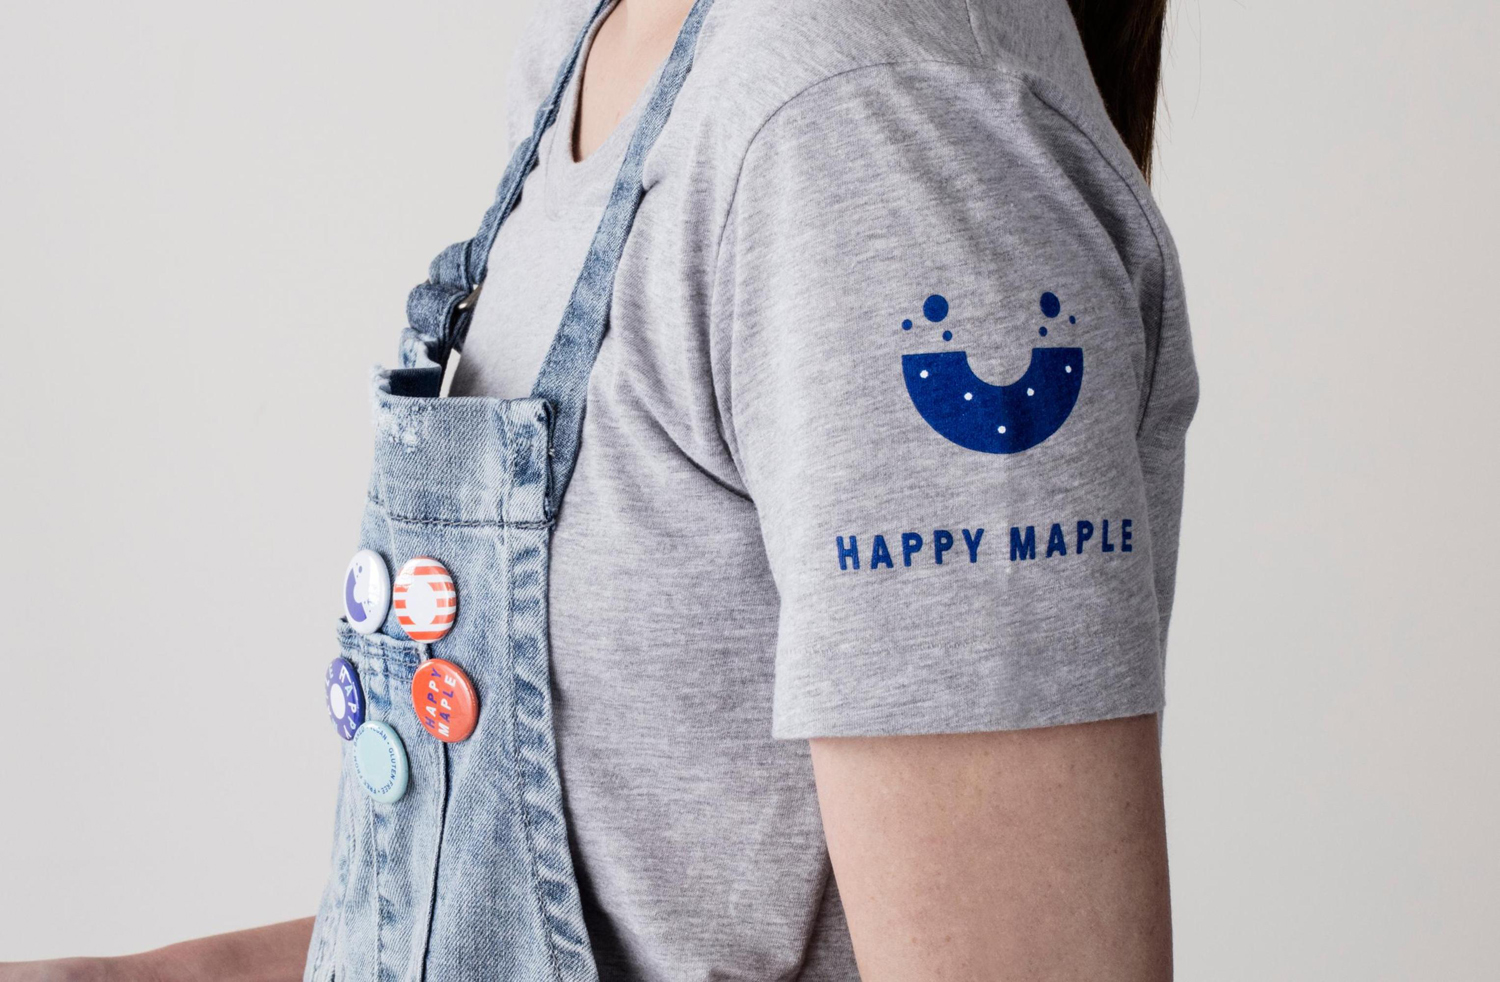 Brand identity, brand t-shirt and badges by Sydney-based graphic design studio Garbett for donut bakery Happy Maple. 